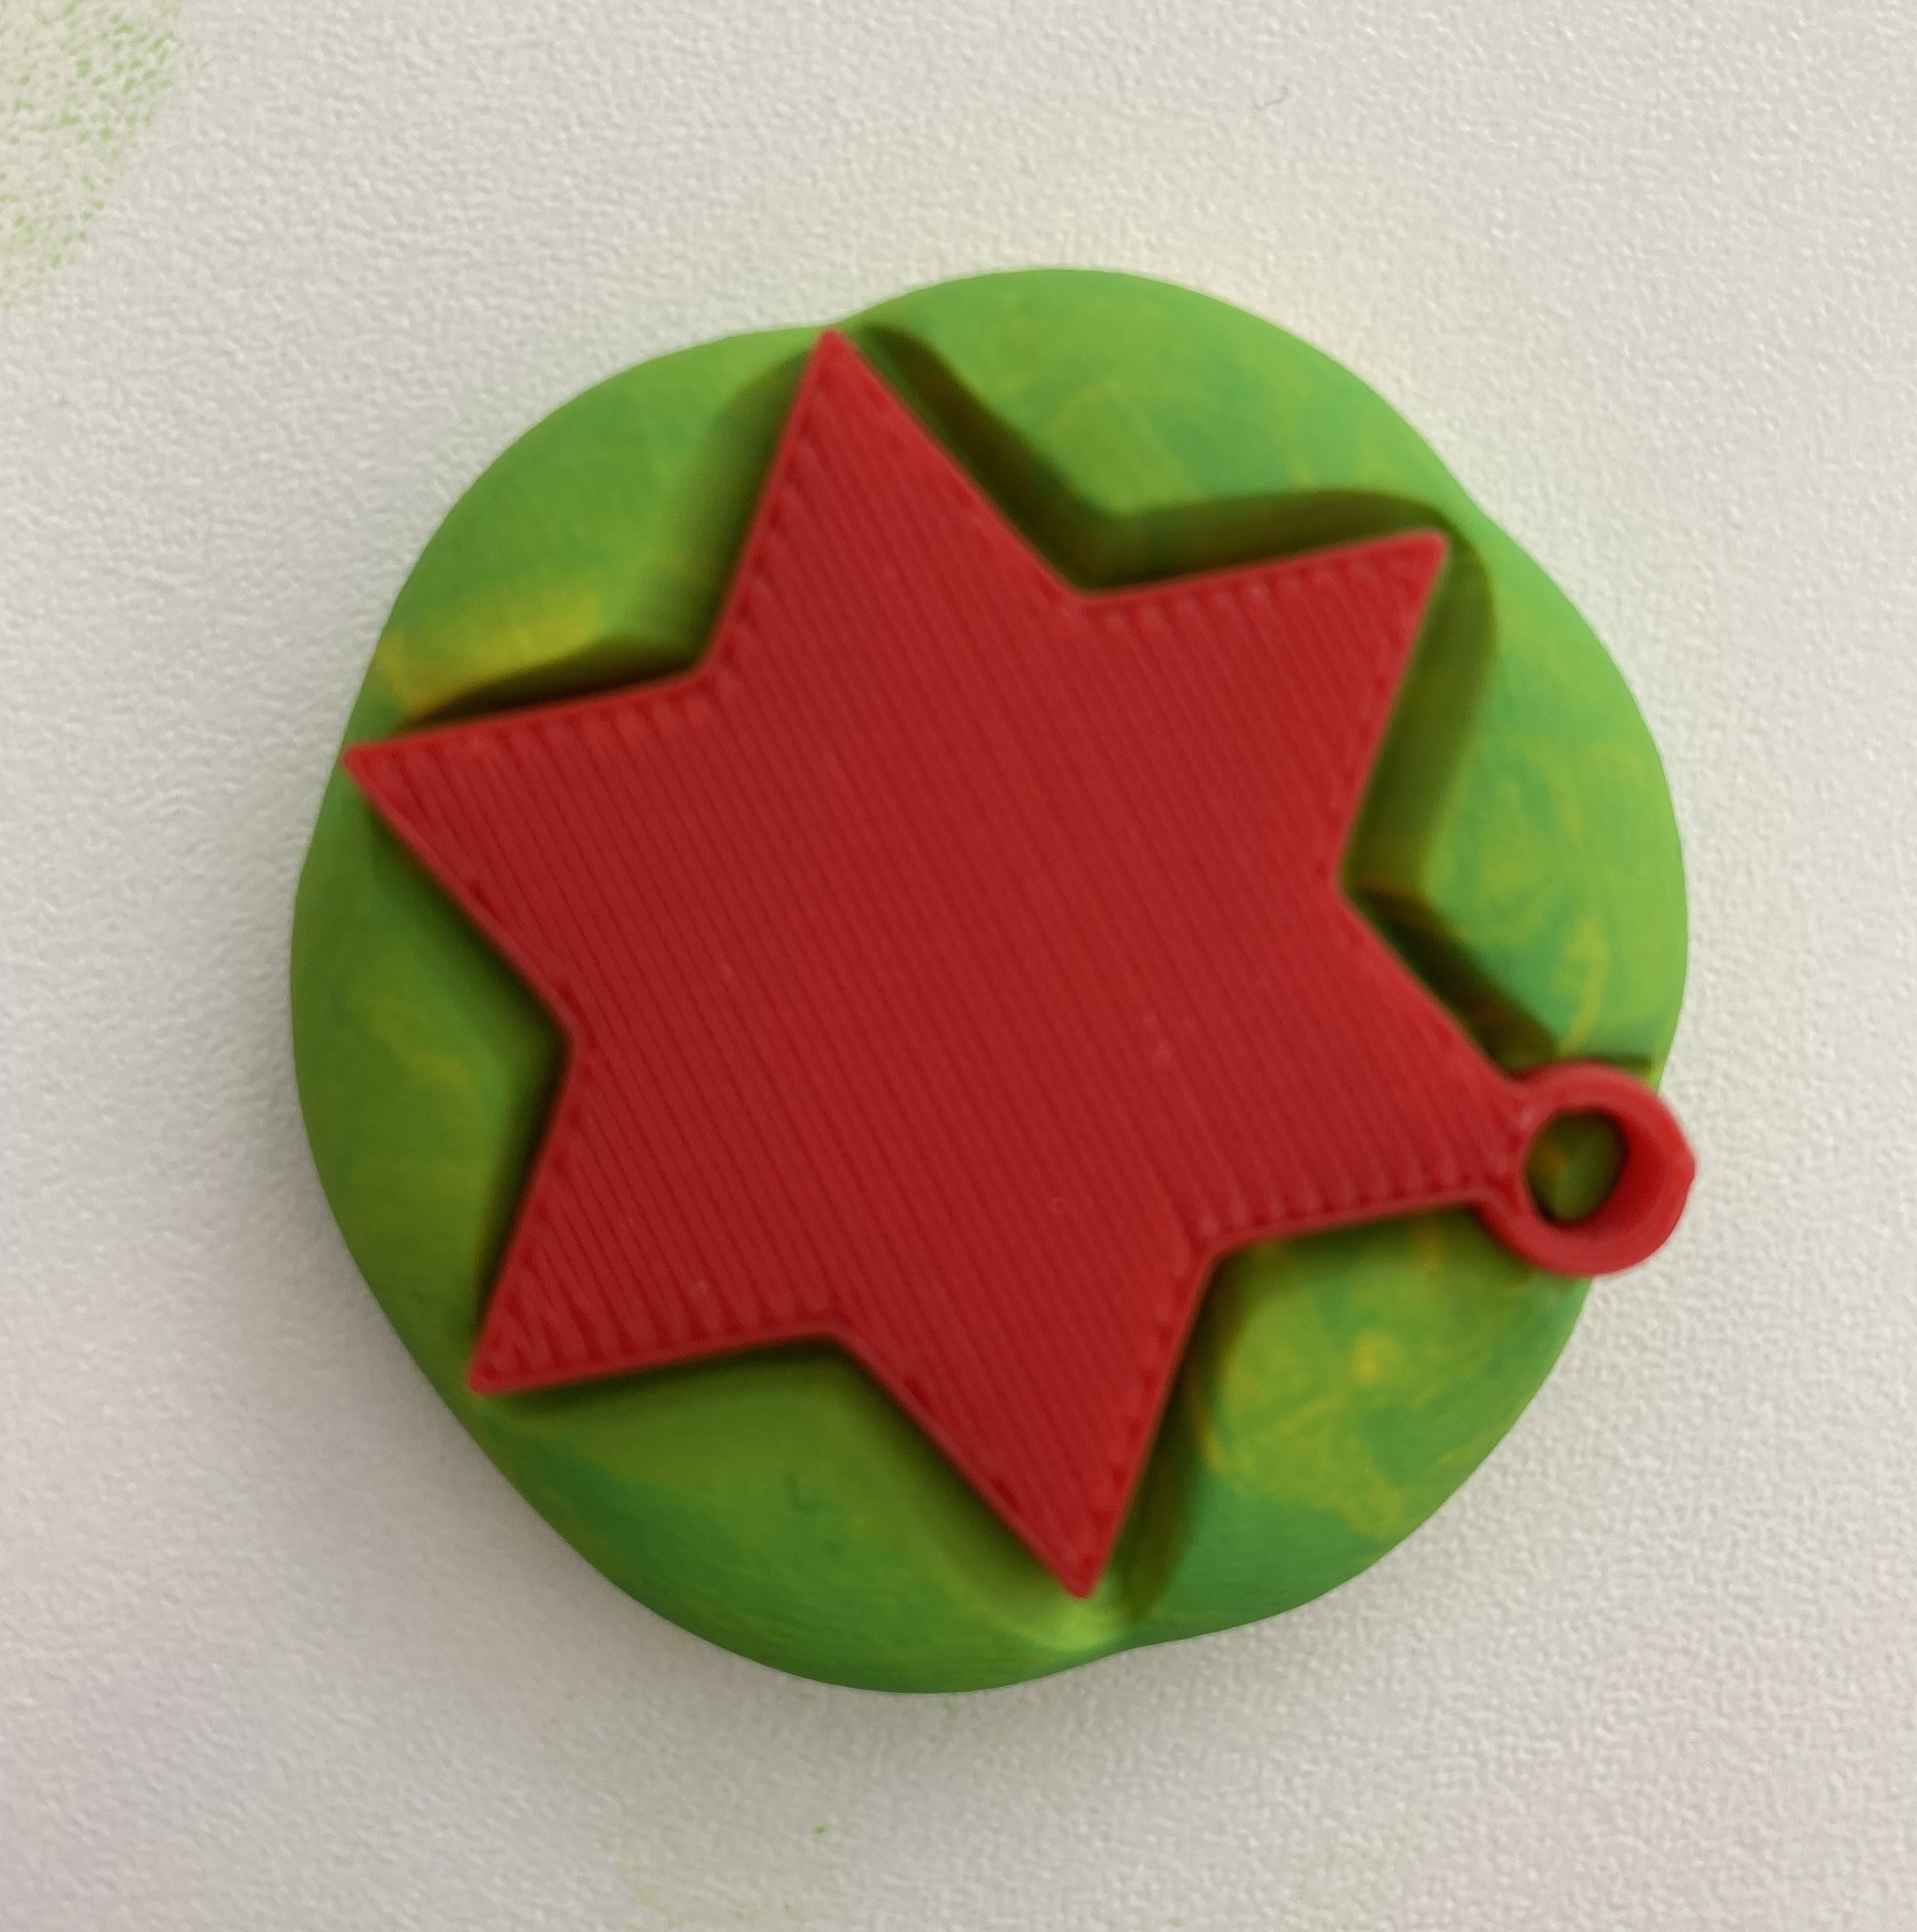 Flat star 3d print pushed into a green ball of playdough 